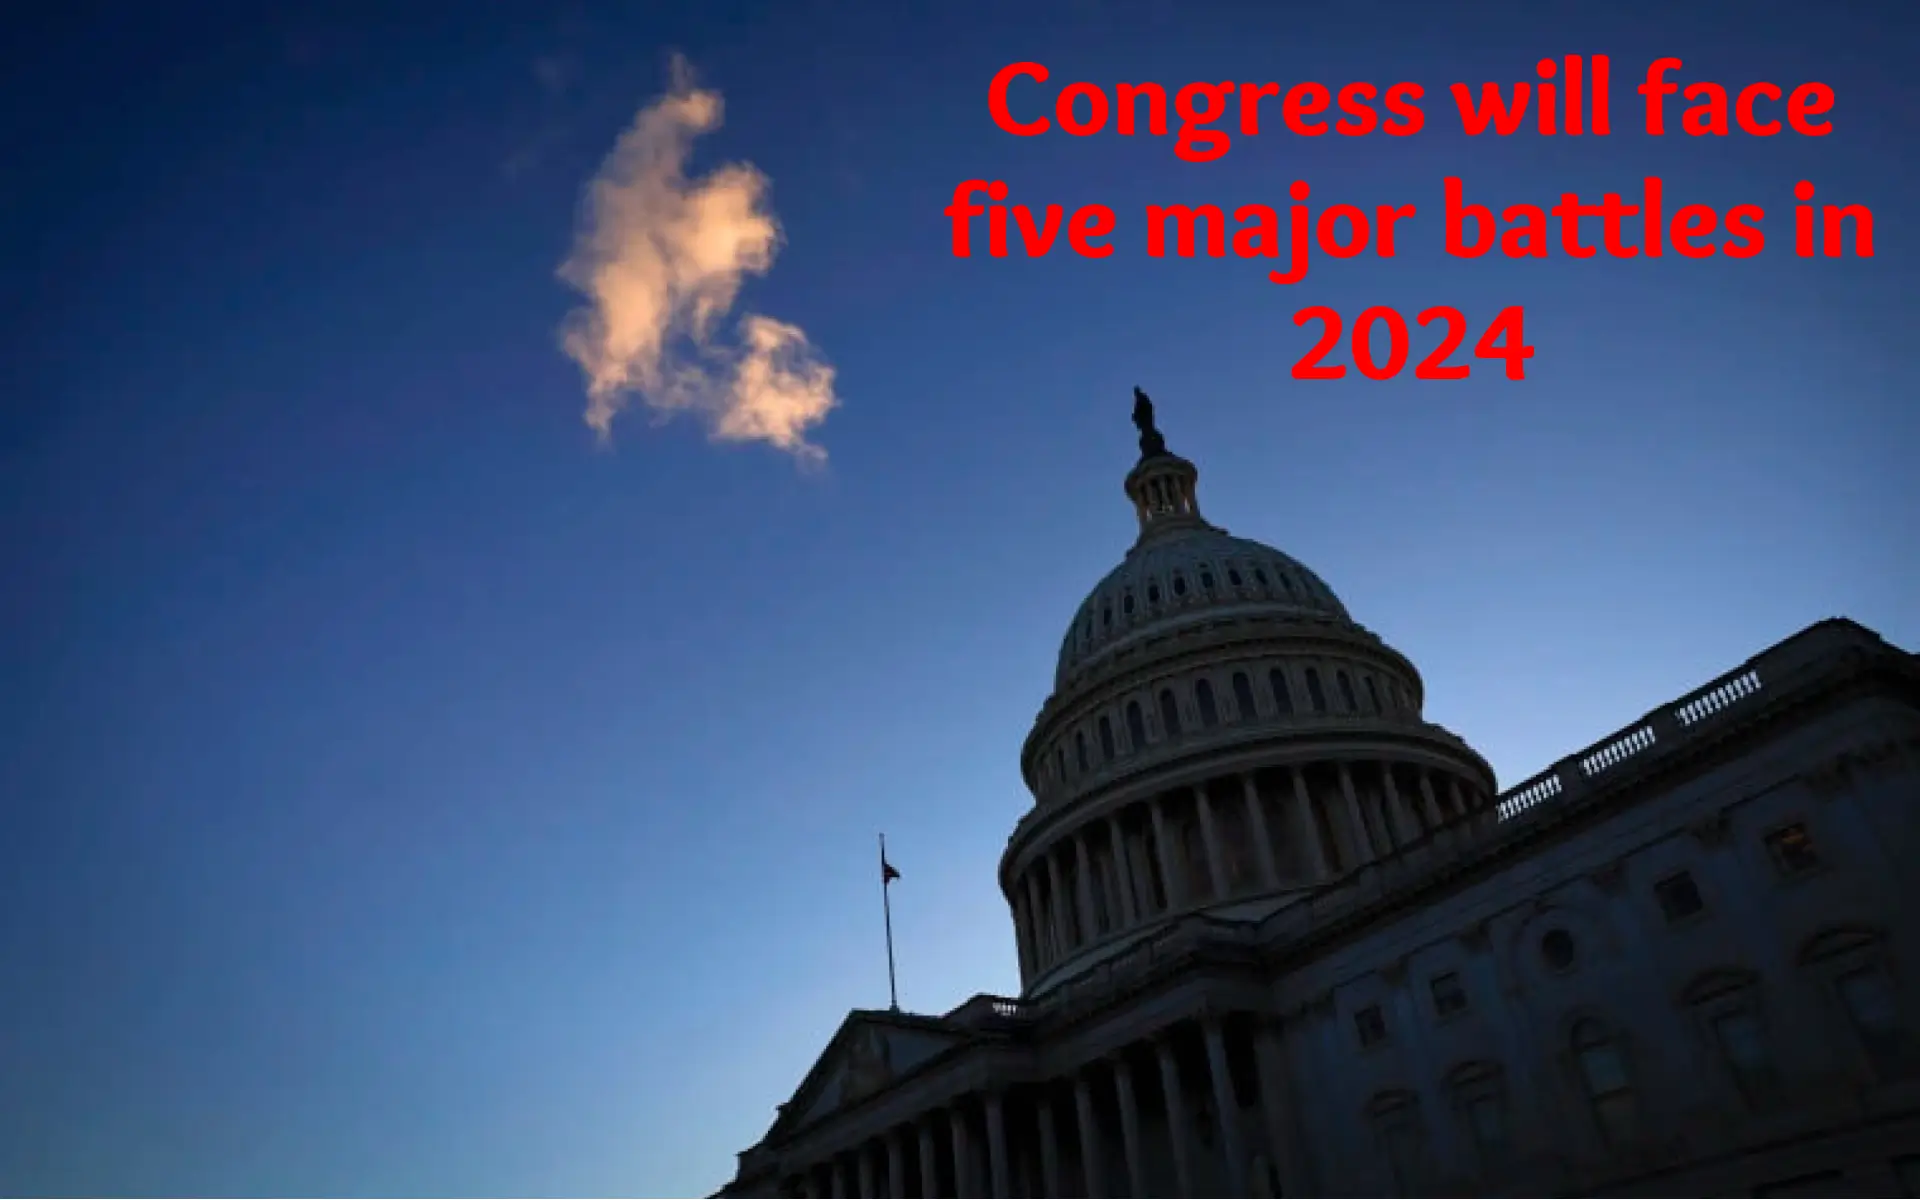 Congress will face five major battles in 2024